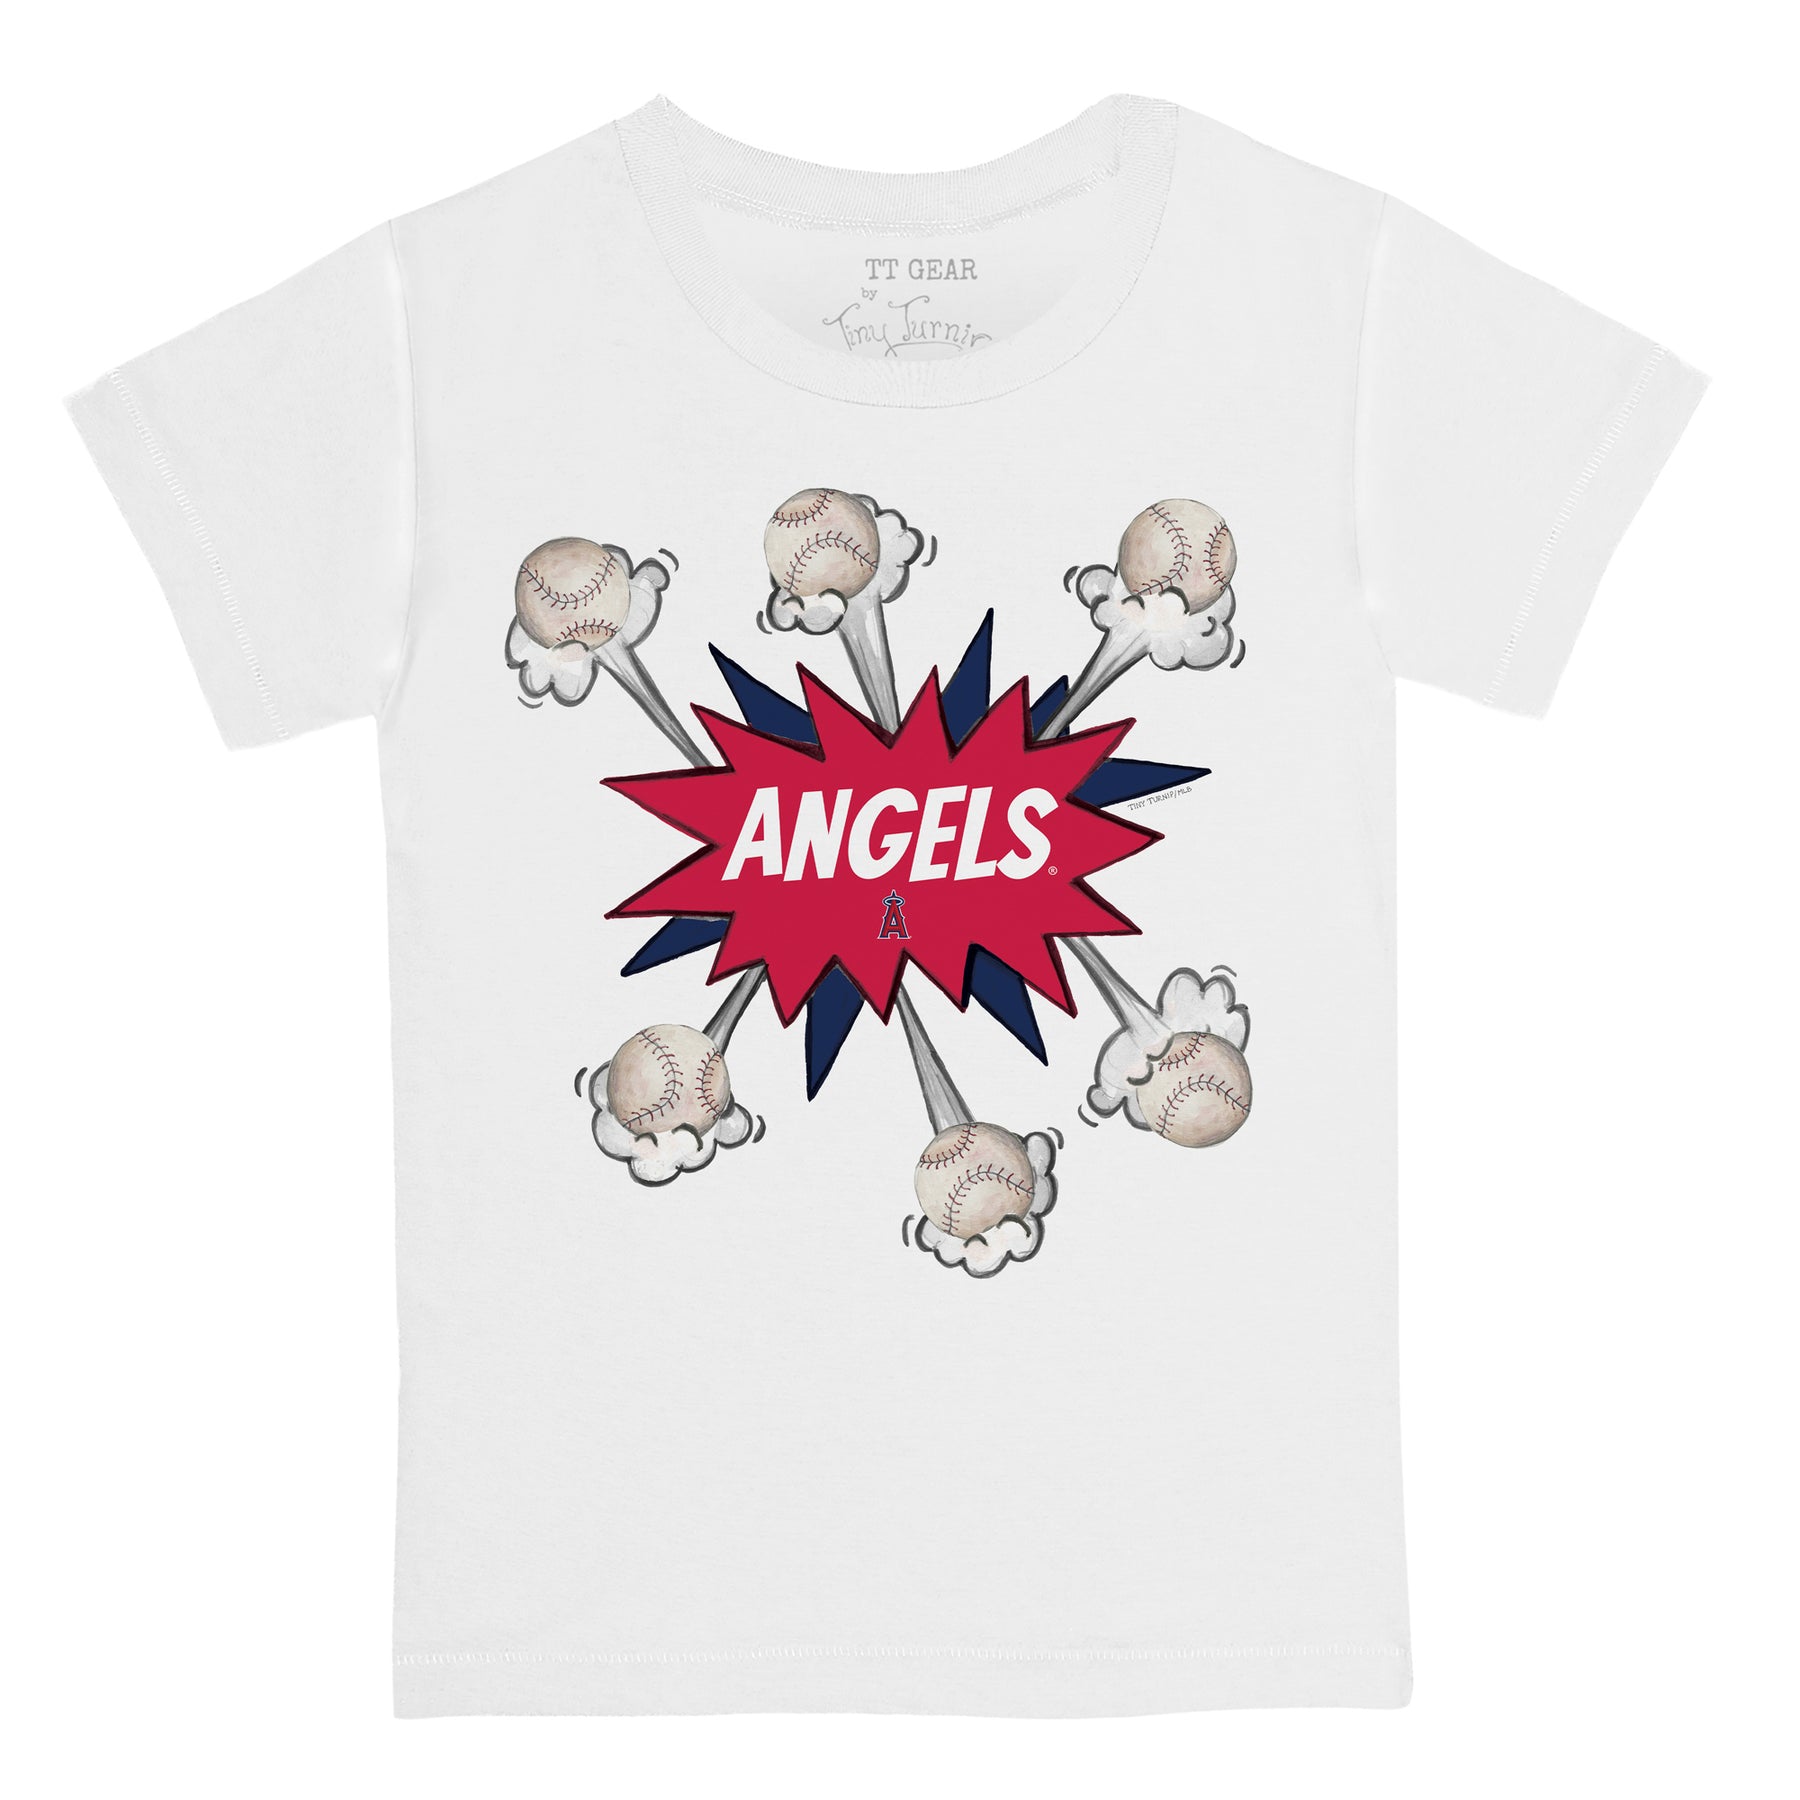 Kids Los Angeles Angels Jerseys, Kids Angels Baseball Jersey